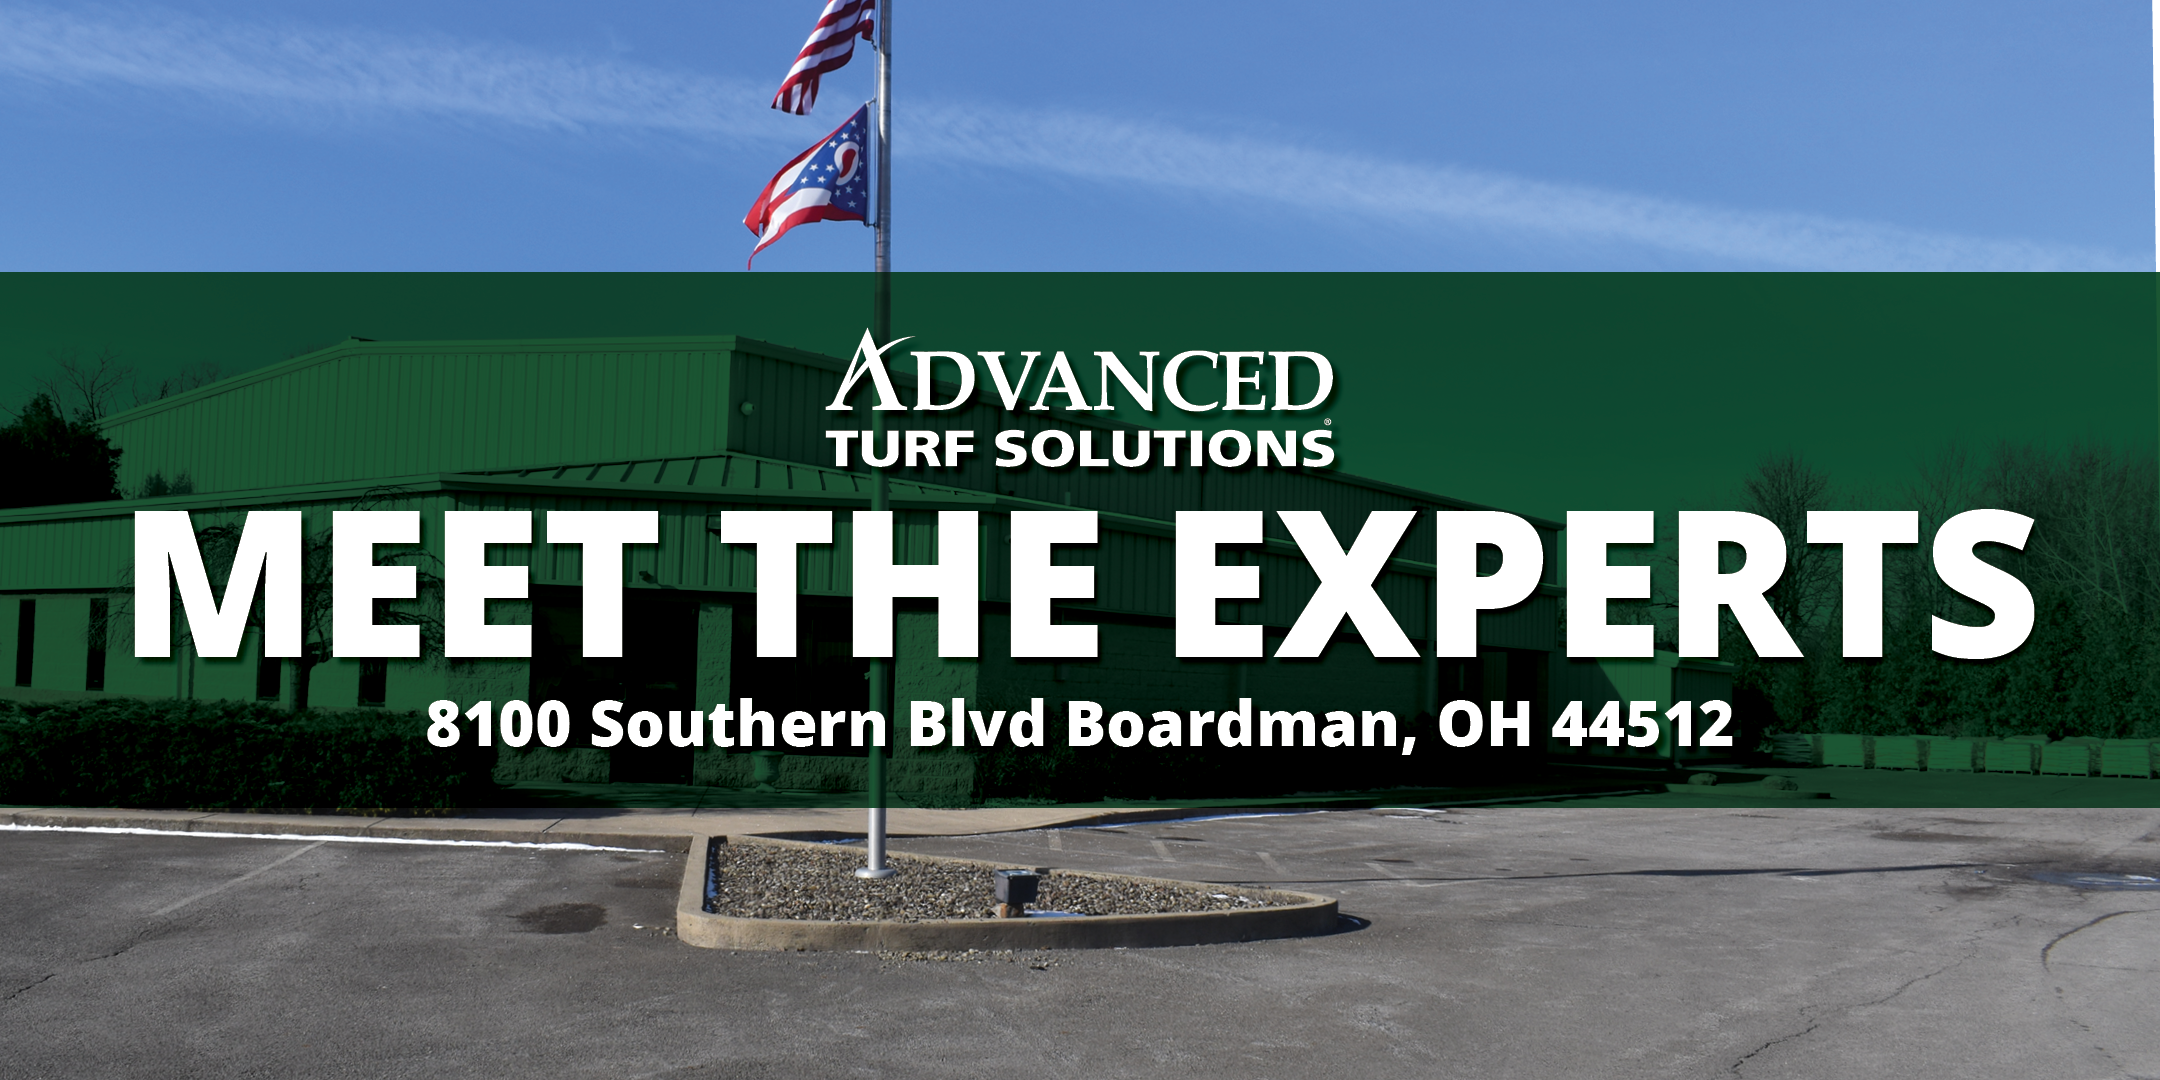 meet the experts at ats boardman